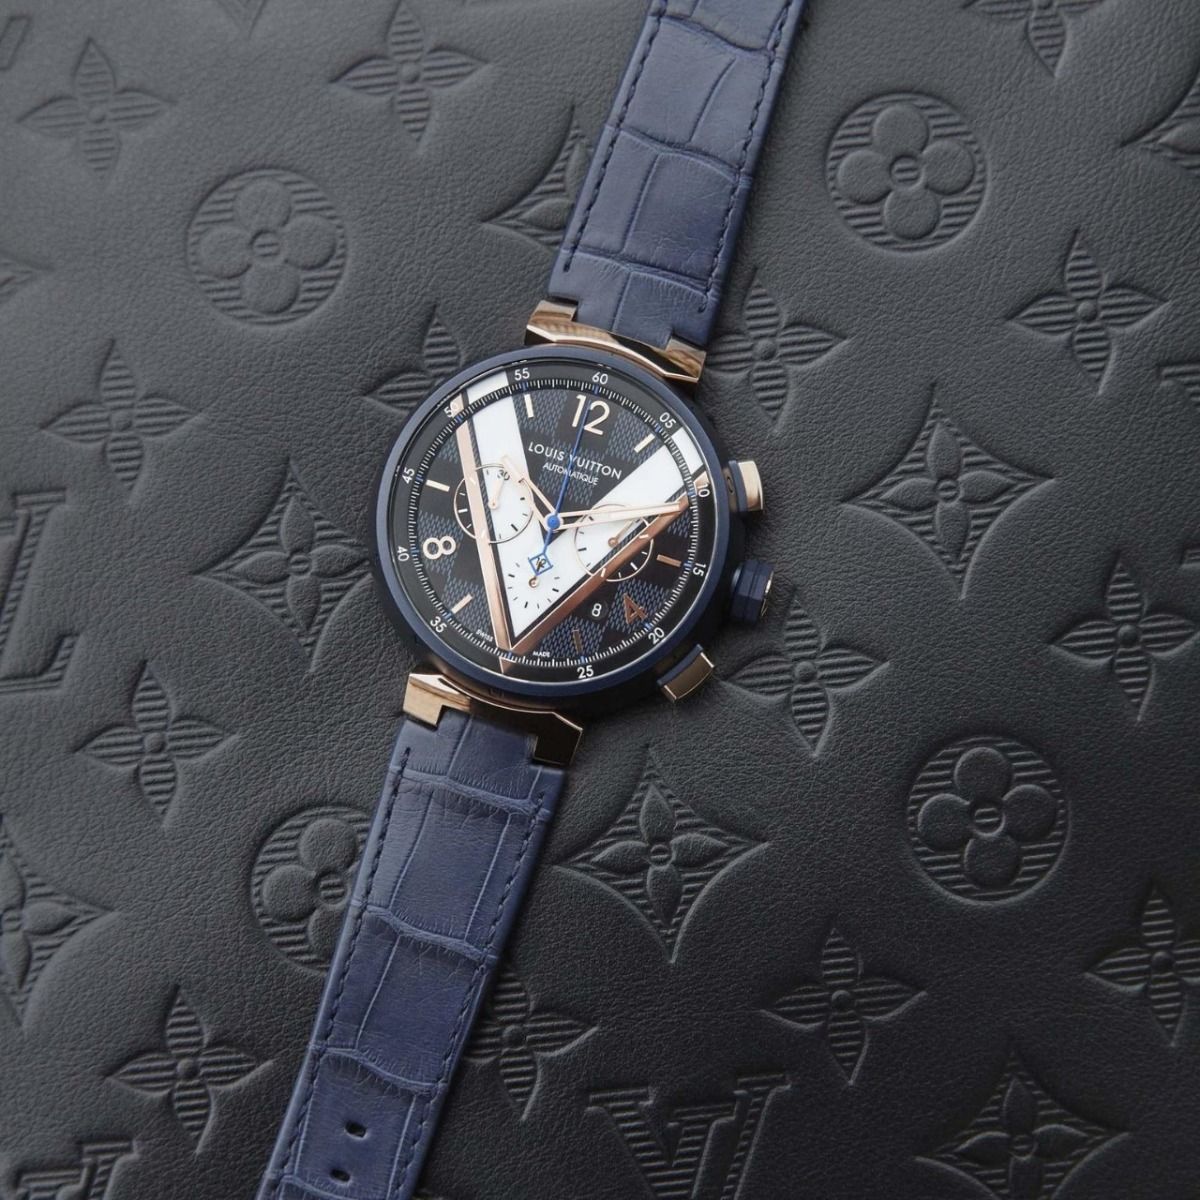 Louis Vuitton Tambour Regatta America's Cup  Louis vuitton watches, Wrist  watch design, Watches for men